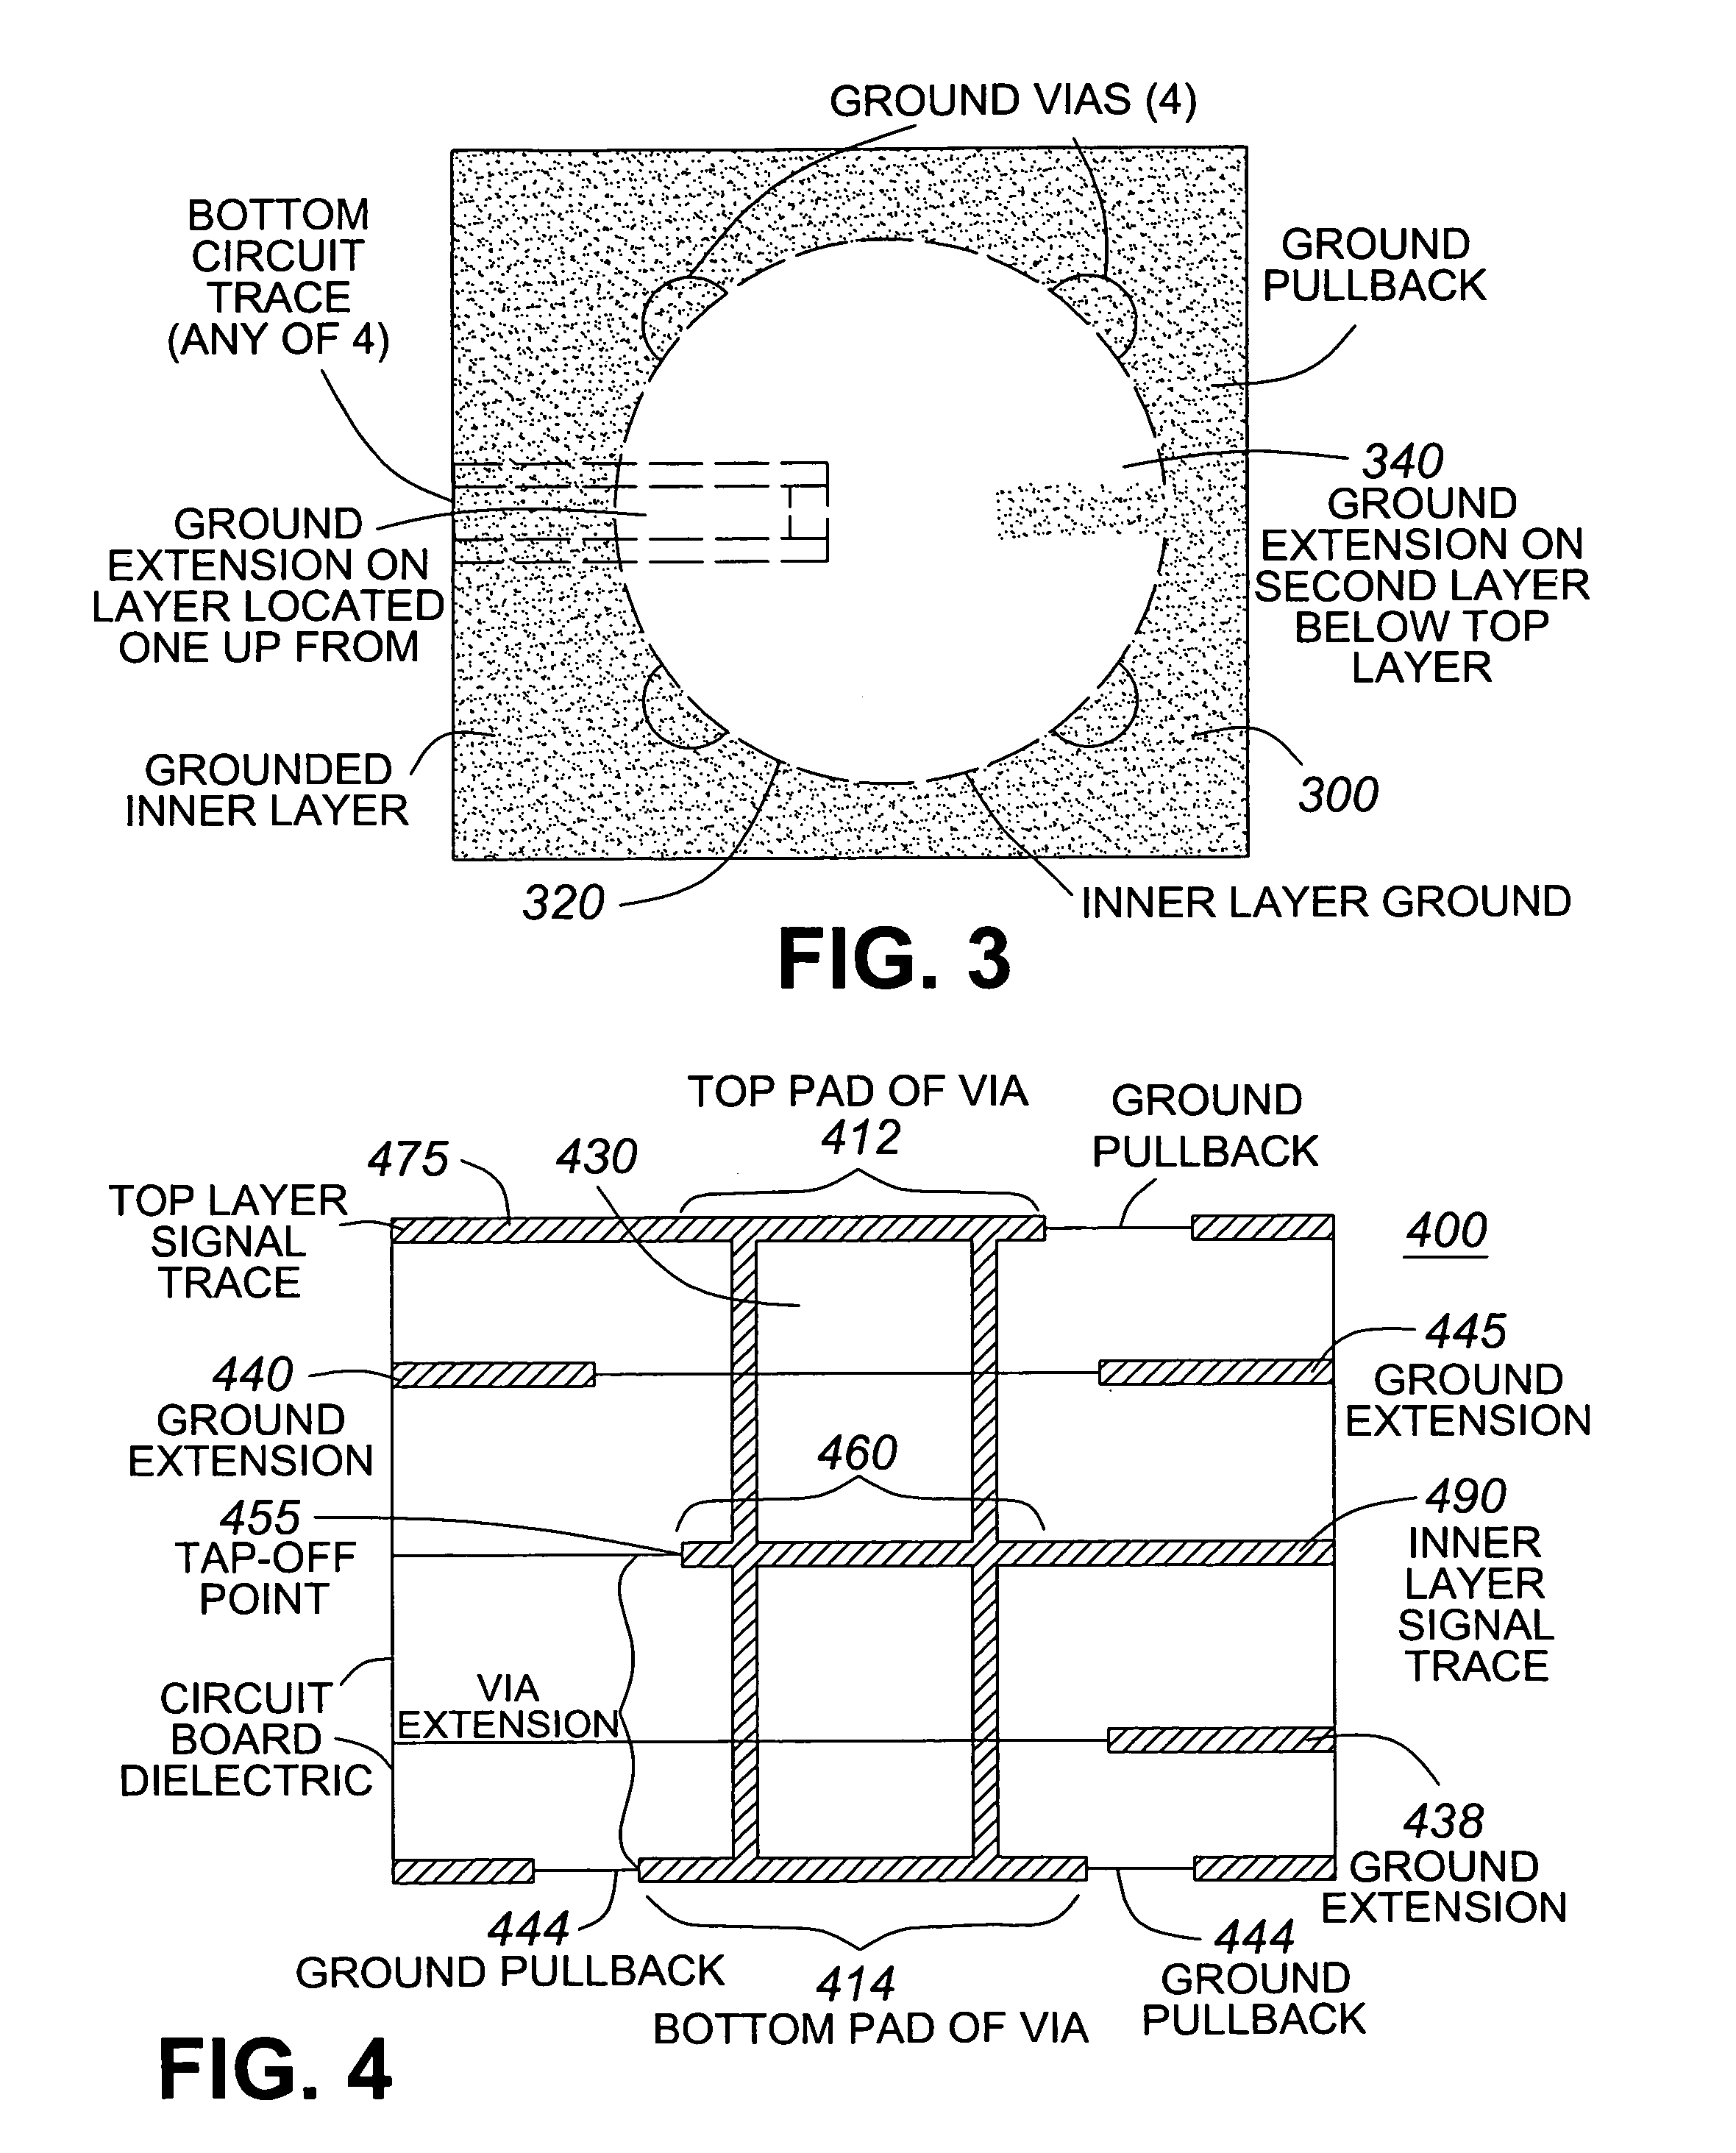 Radio frequency (RF) circuit board topology